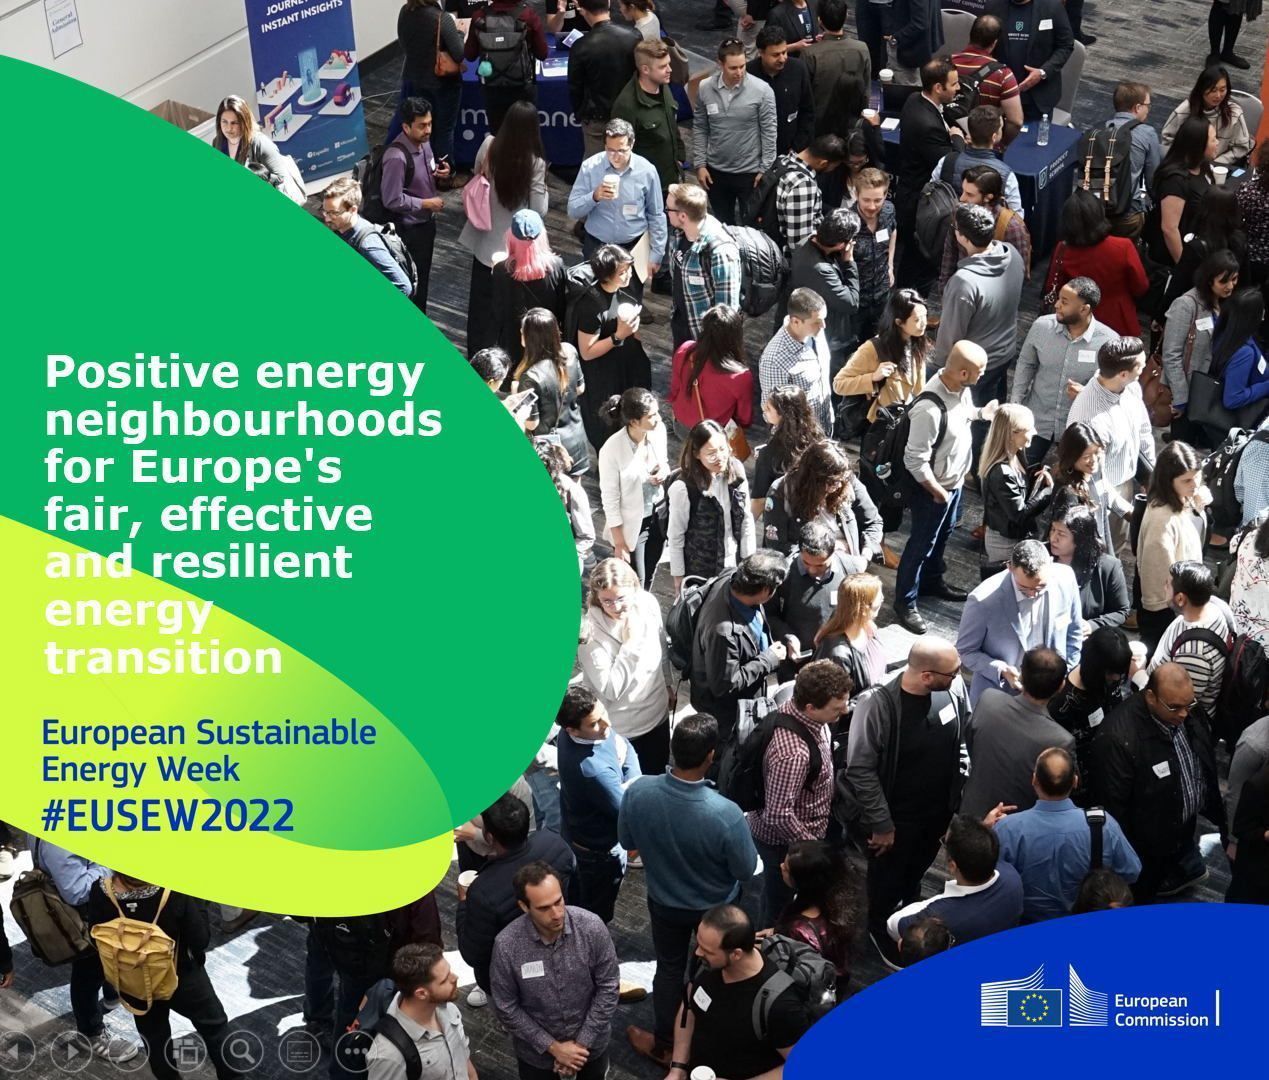 ARV @EUSEW (European Sustainable Energy Week) 2022